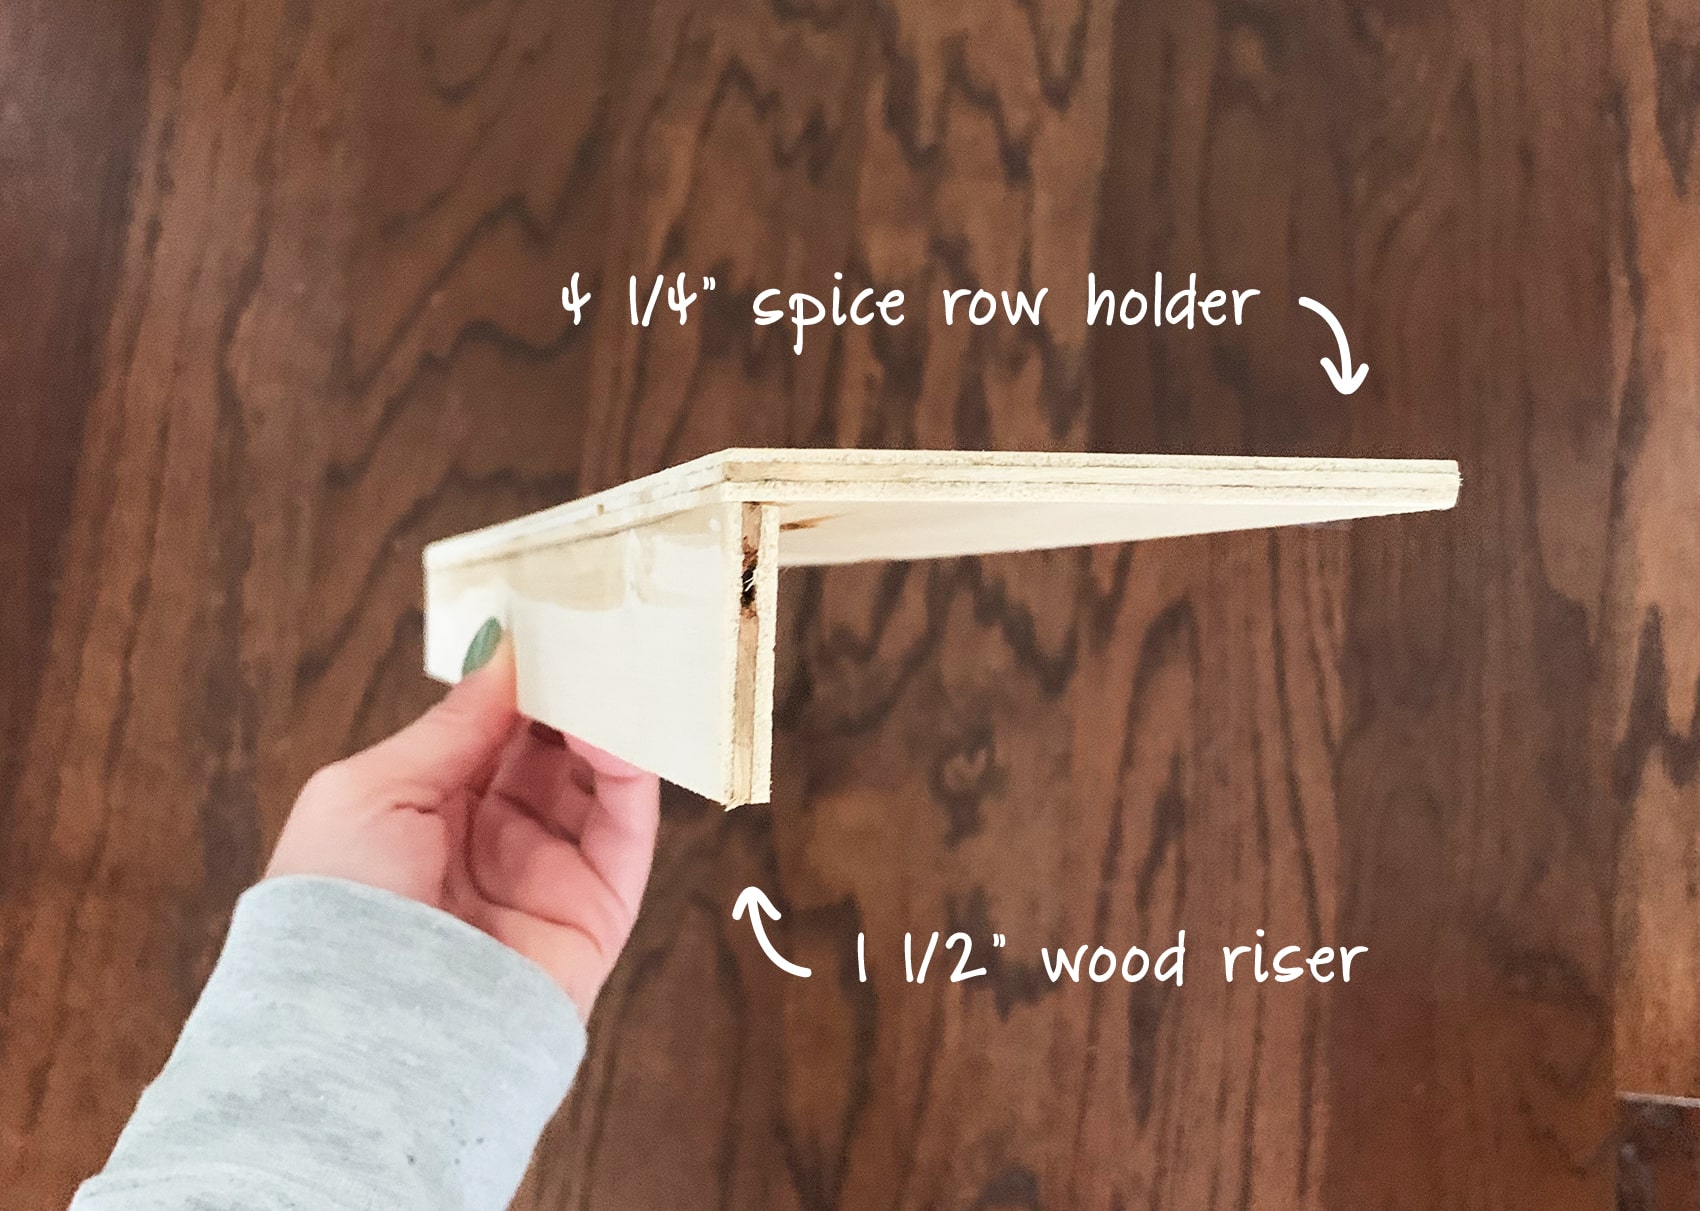 Wood Spice Drawer Insert